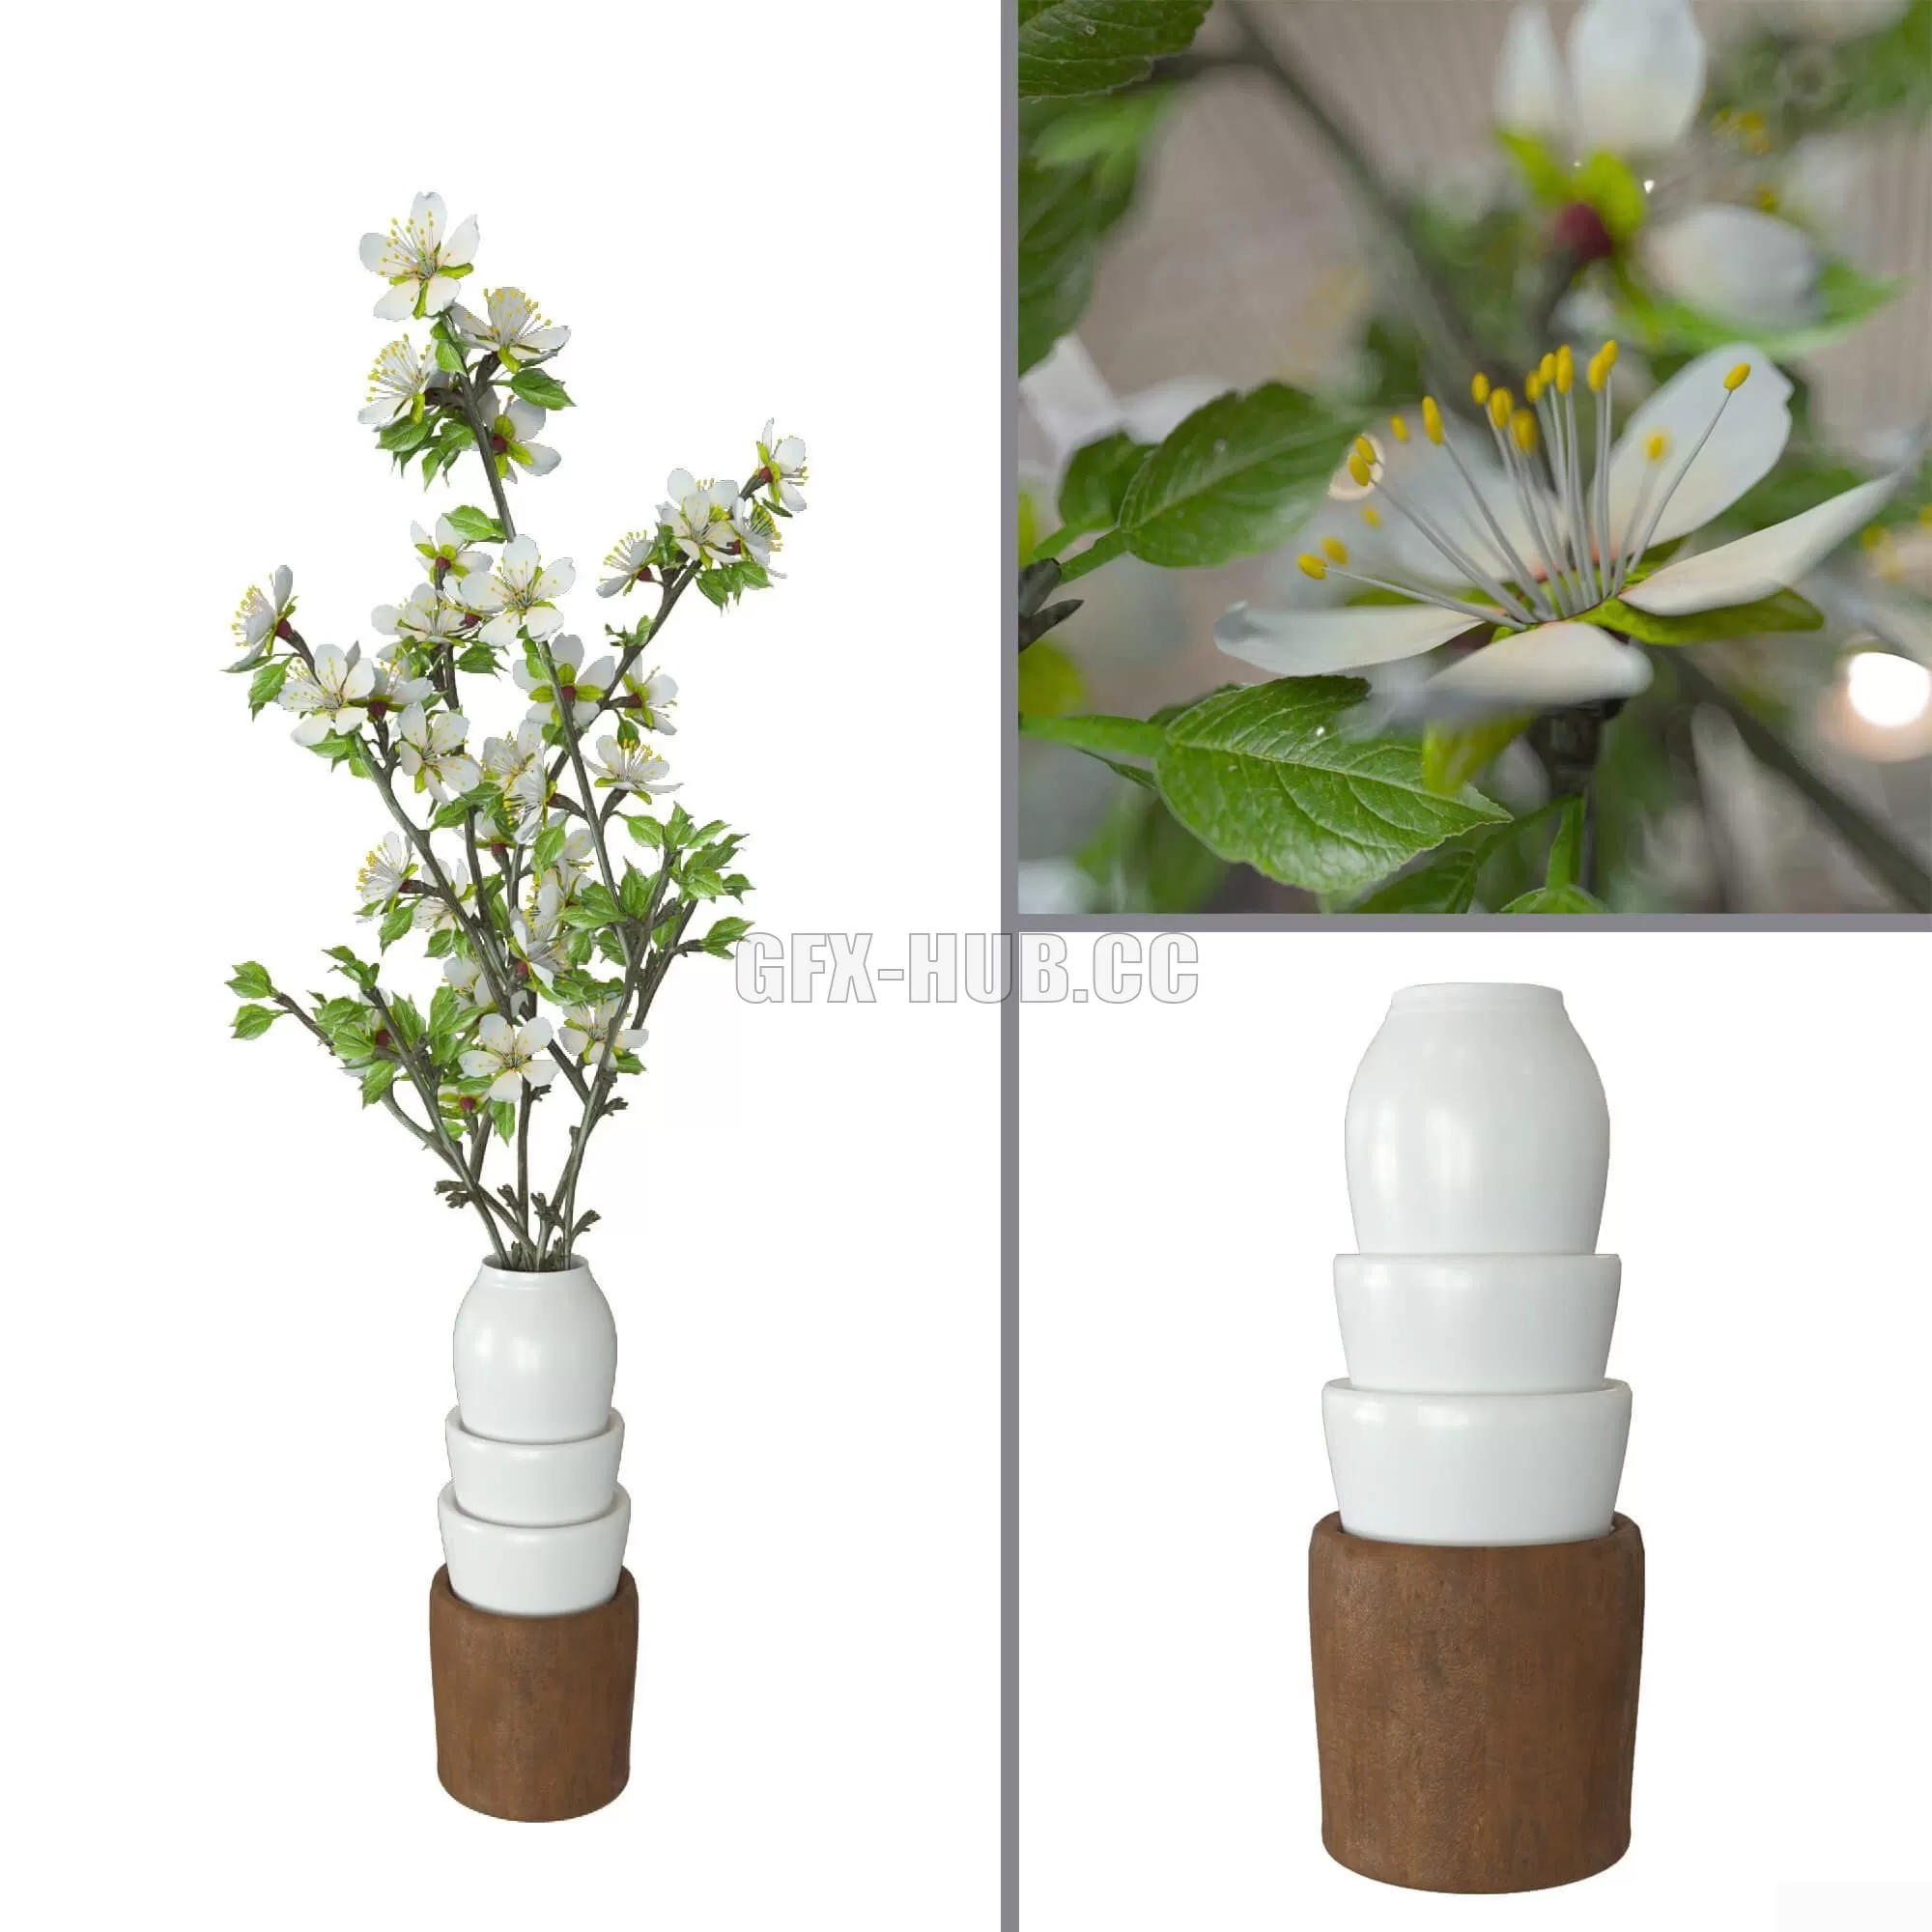 VASE – Prunus domestica vase